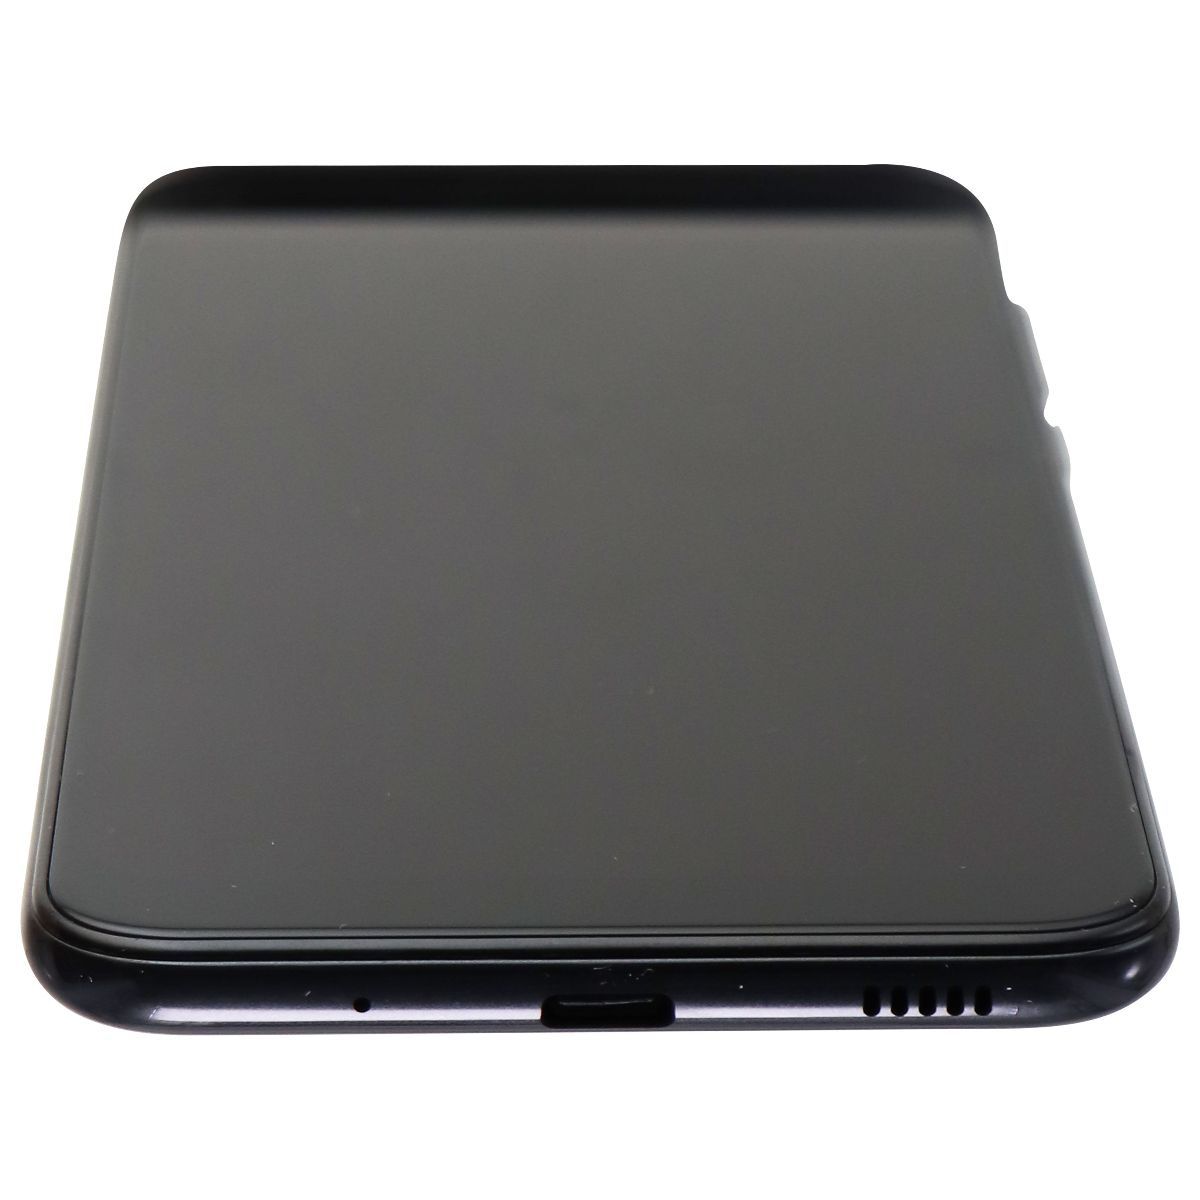 Samsung Galaxy A11 (6.4-inch) Smartphone (SM-A115U1) Unlocked - 32GB/Black Cell Phones & Smartphones Samsung    - Simple Cell Bulk Wholesale Pricing - USA Seller